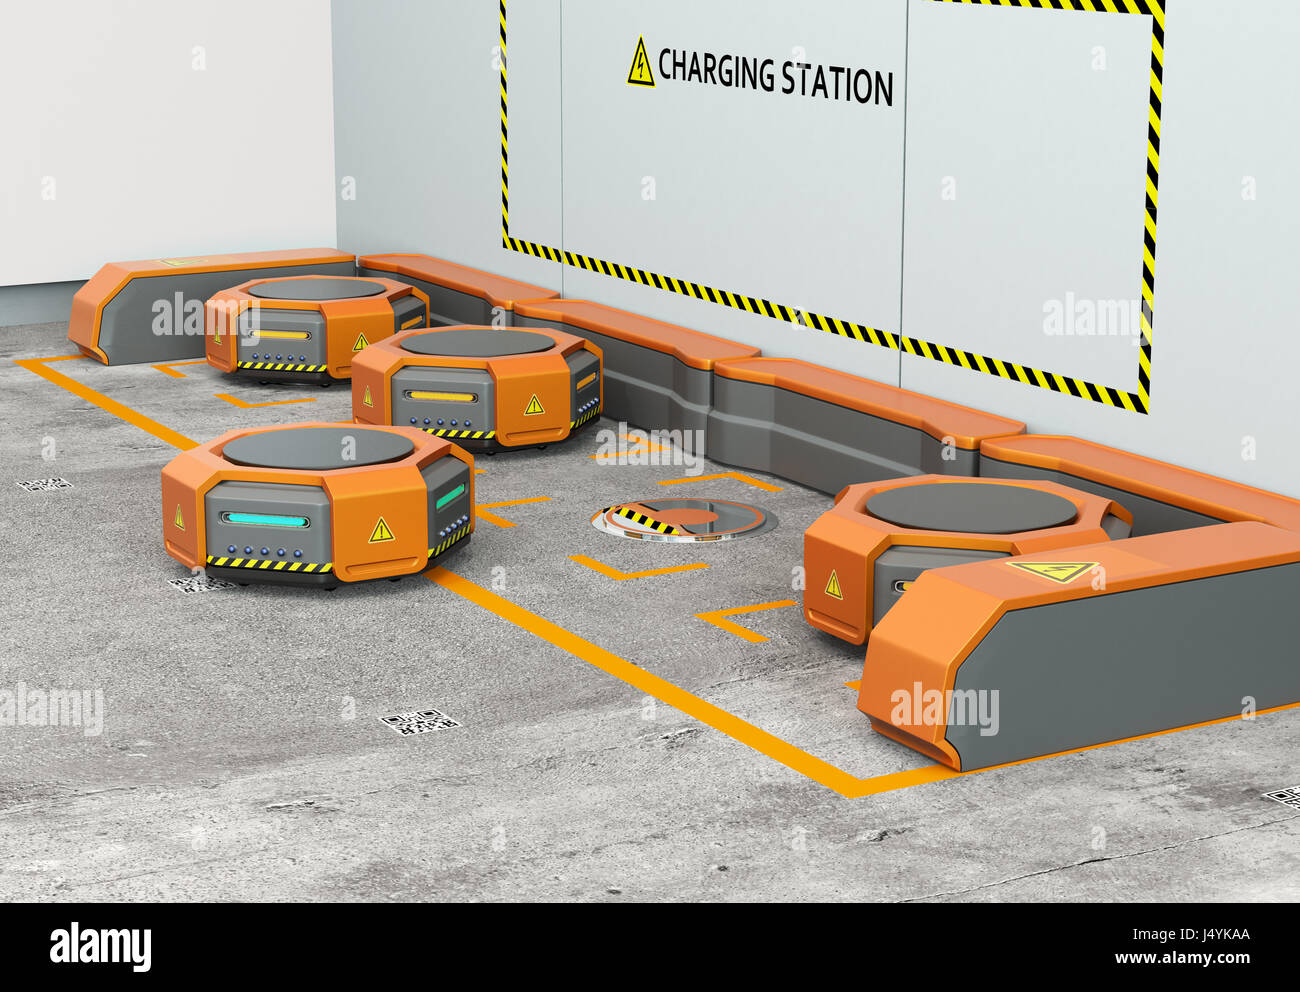 Warehouse robots charging at charging station. Advanced warehouse robotics technology concept. 3D rendering image. Stock Photo